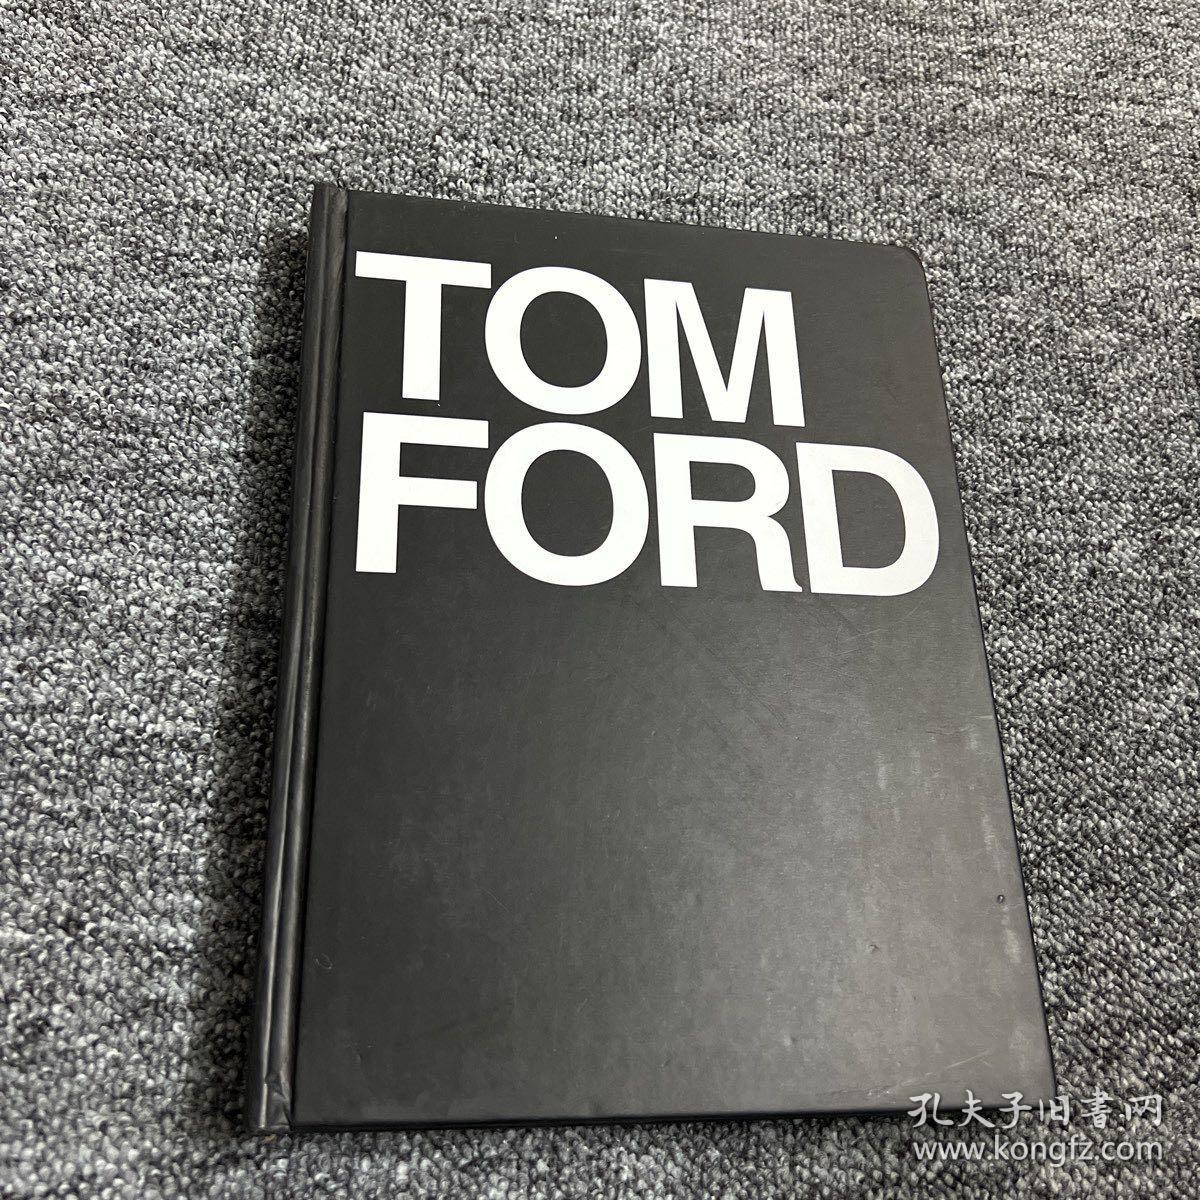 TOM FORD 汤姆·福特 国际风格水疗专刊STYLISH SPA